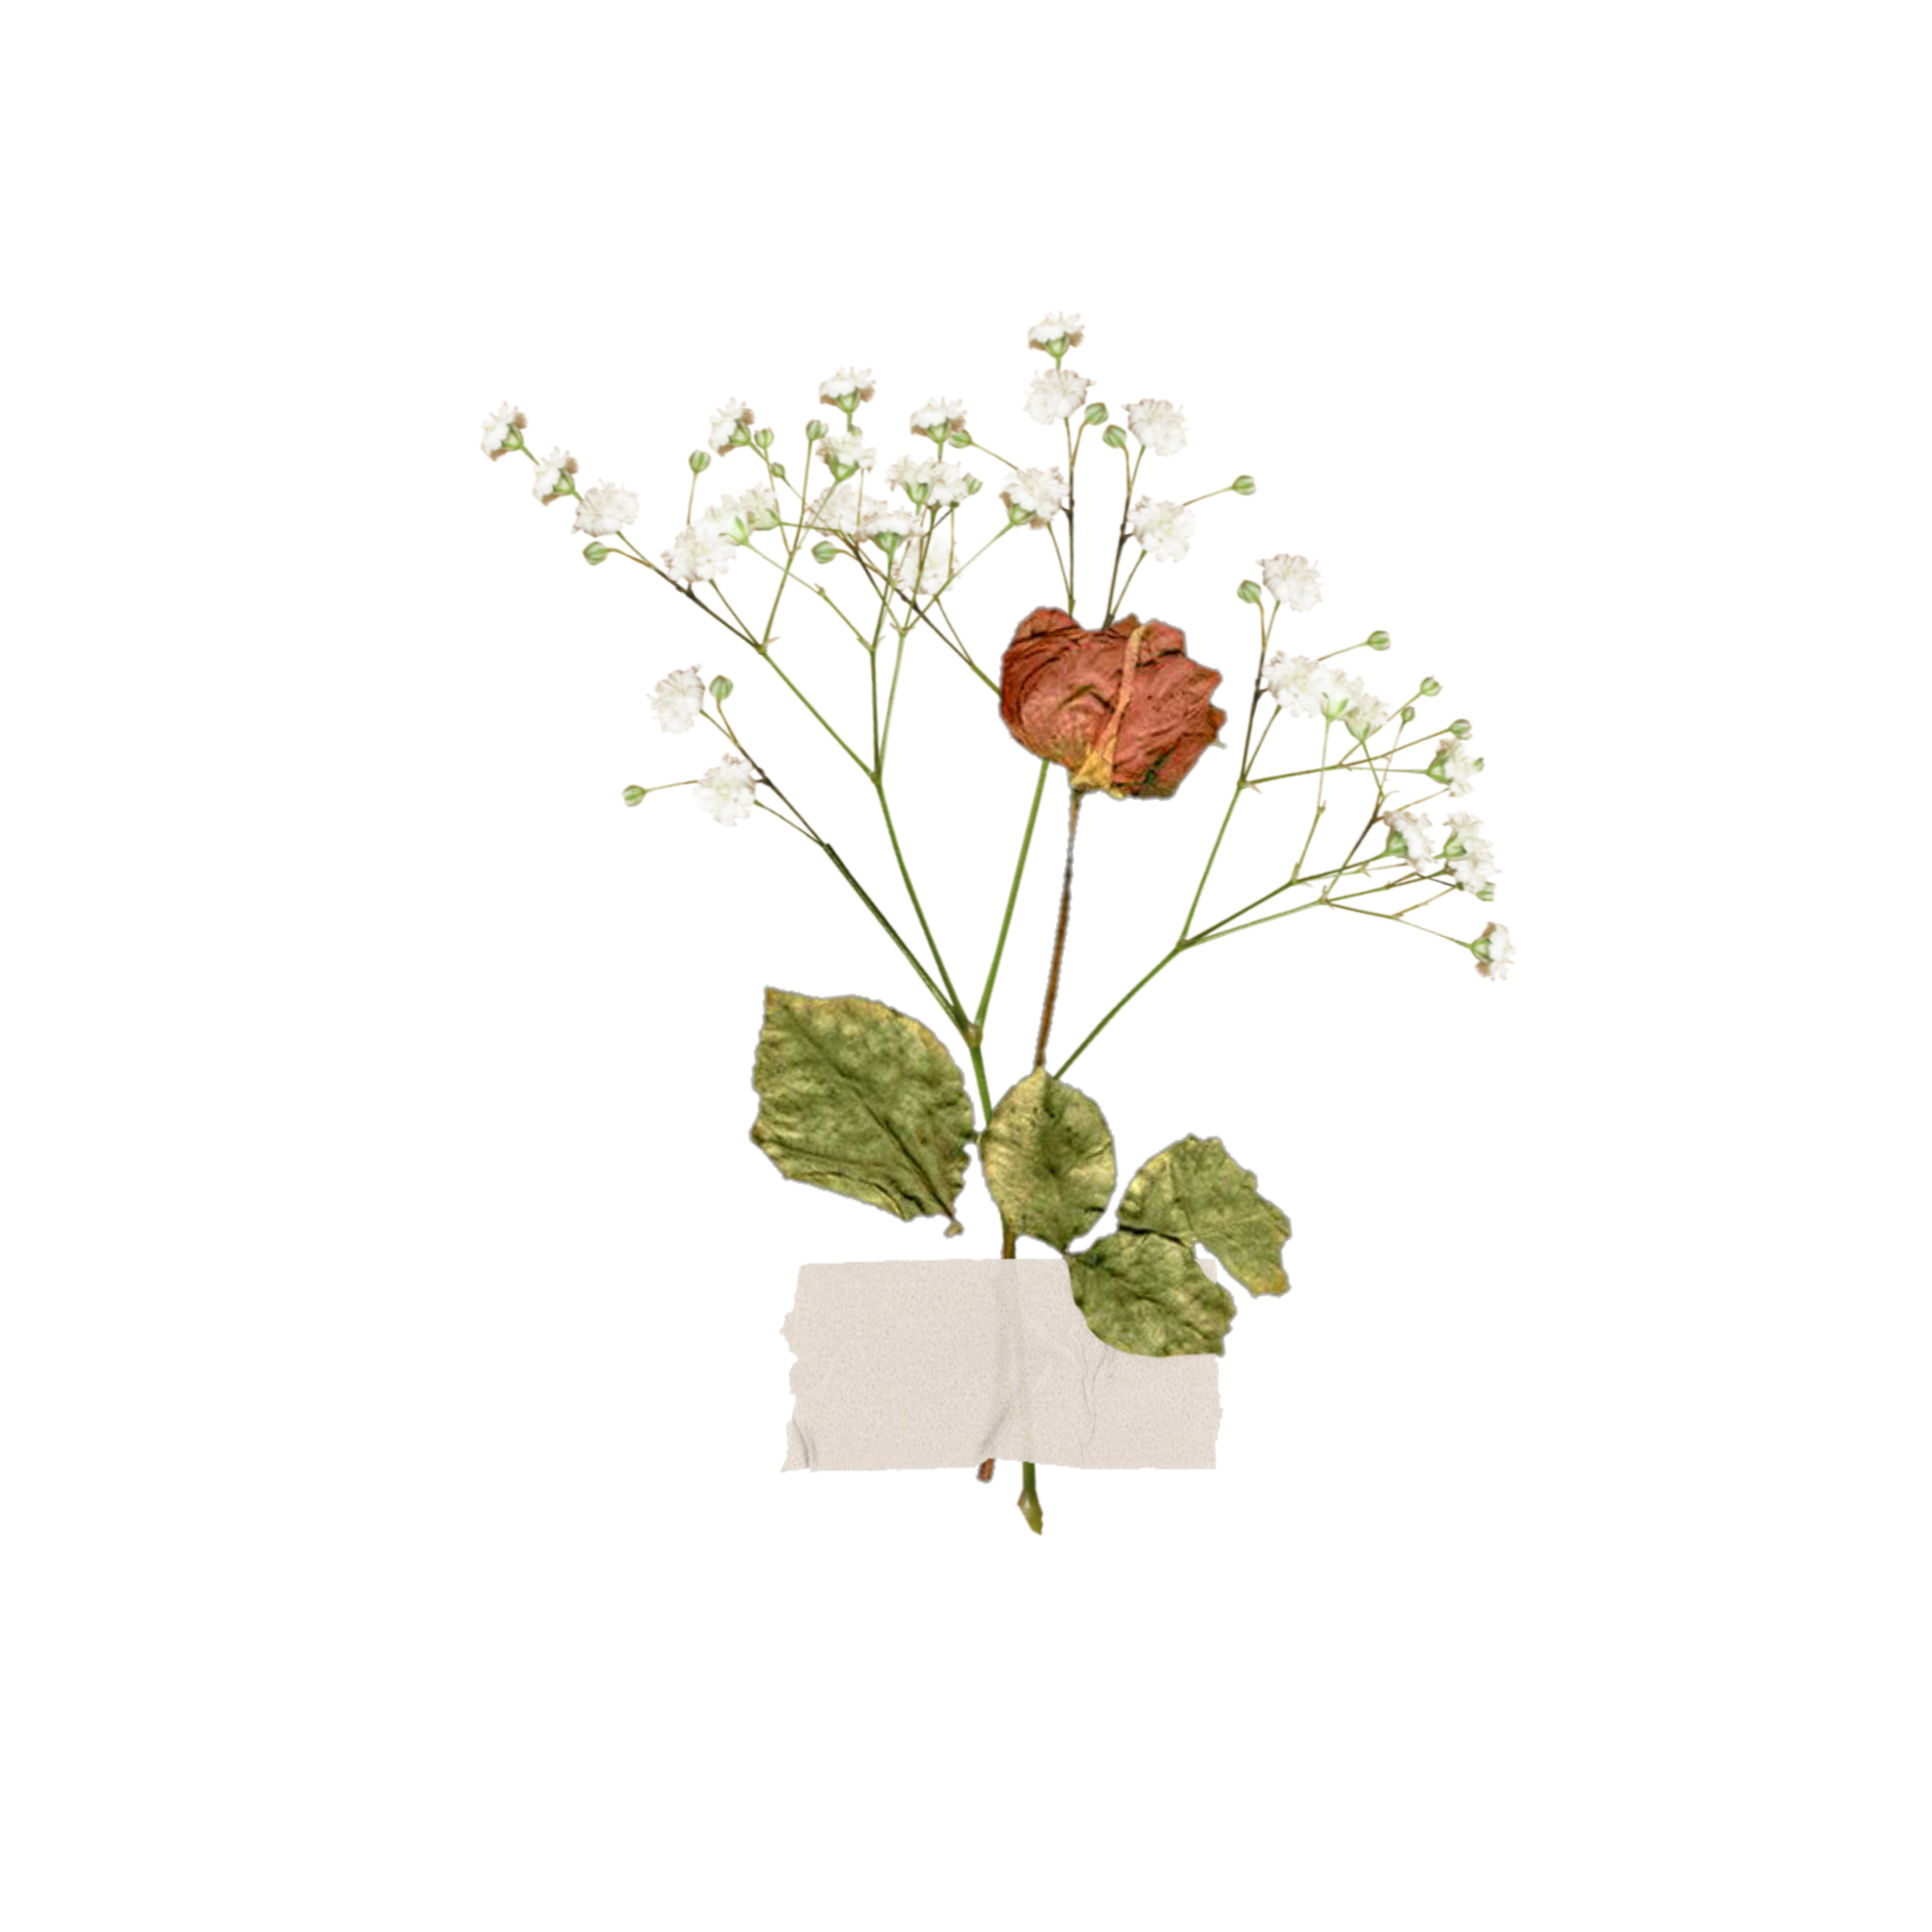 Flower Aesthetic Transparent Image